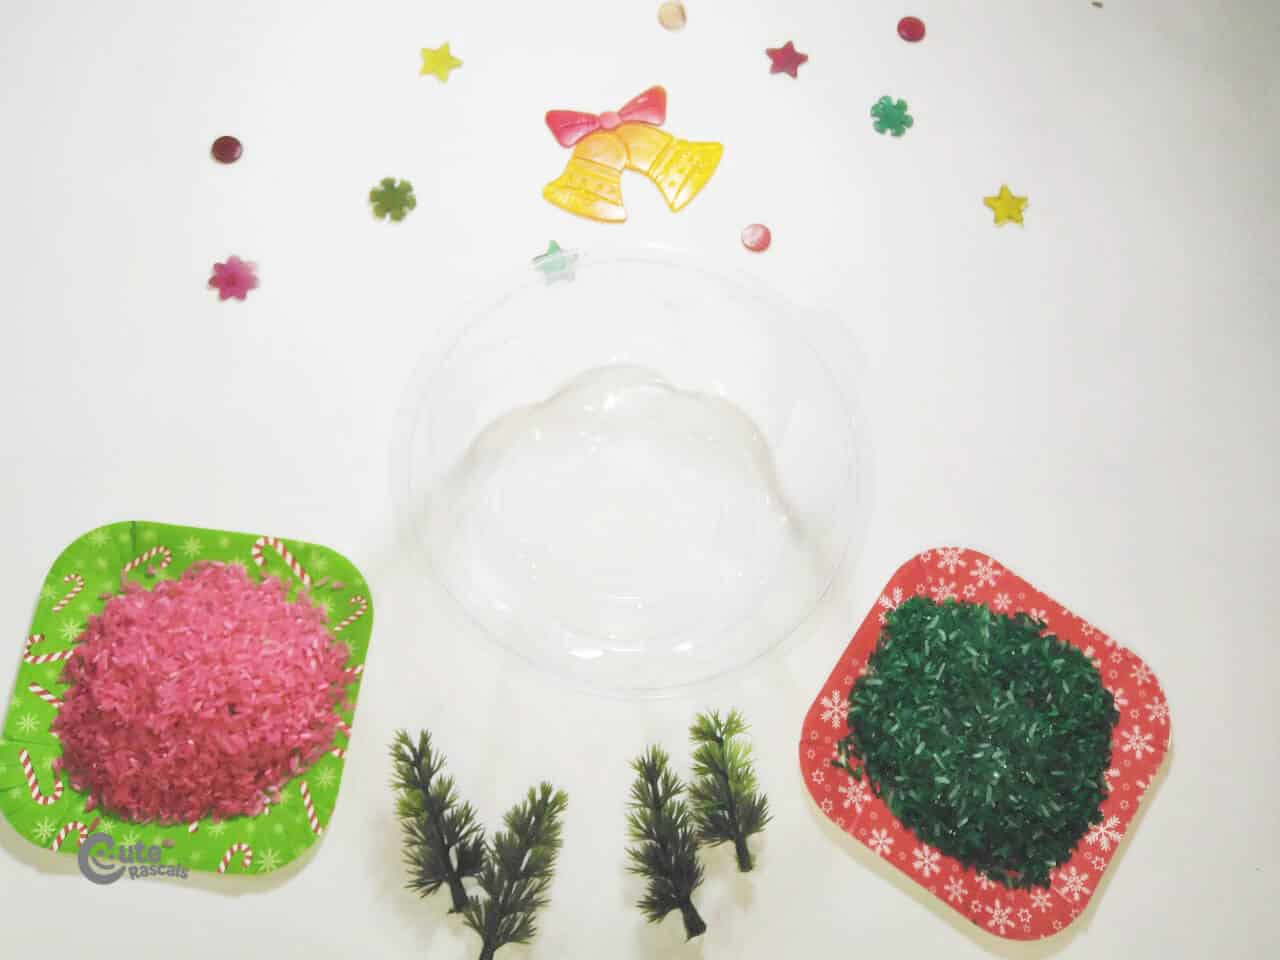 Materials Hidden Christmas Trees Activity. Christmas activities for kids